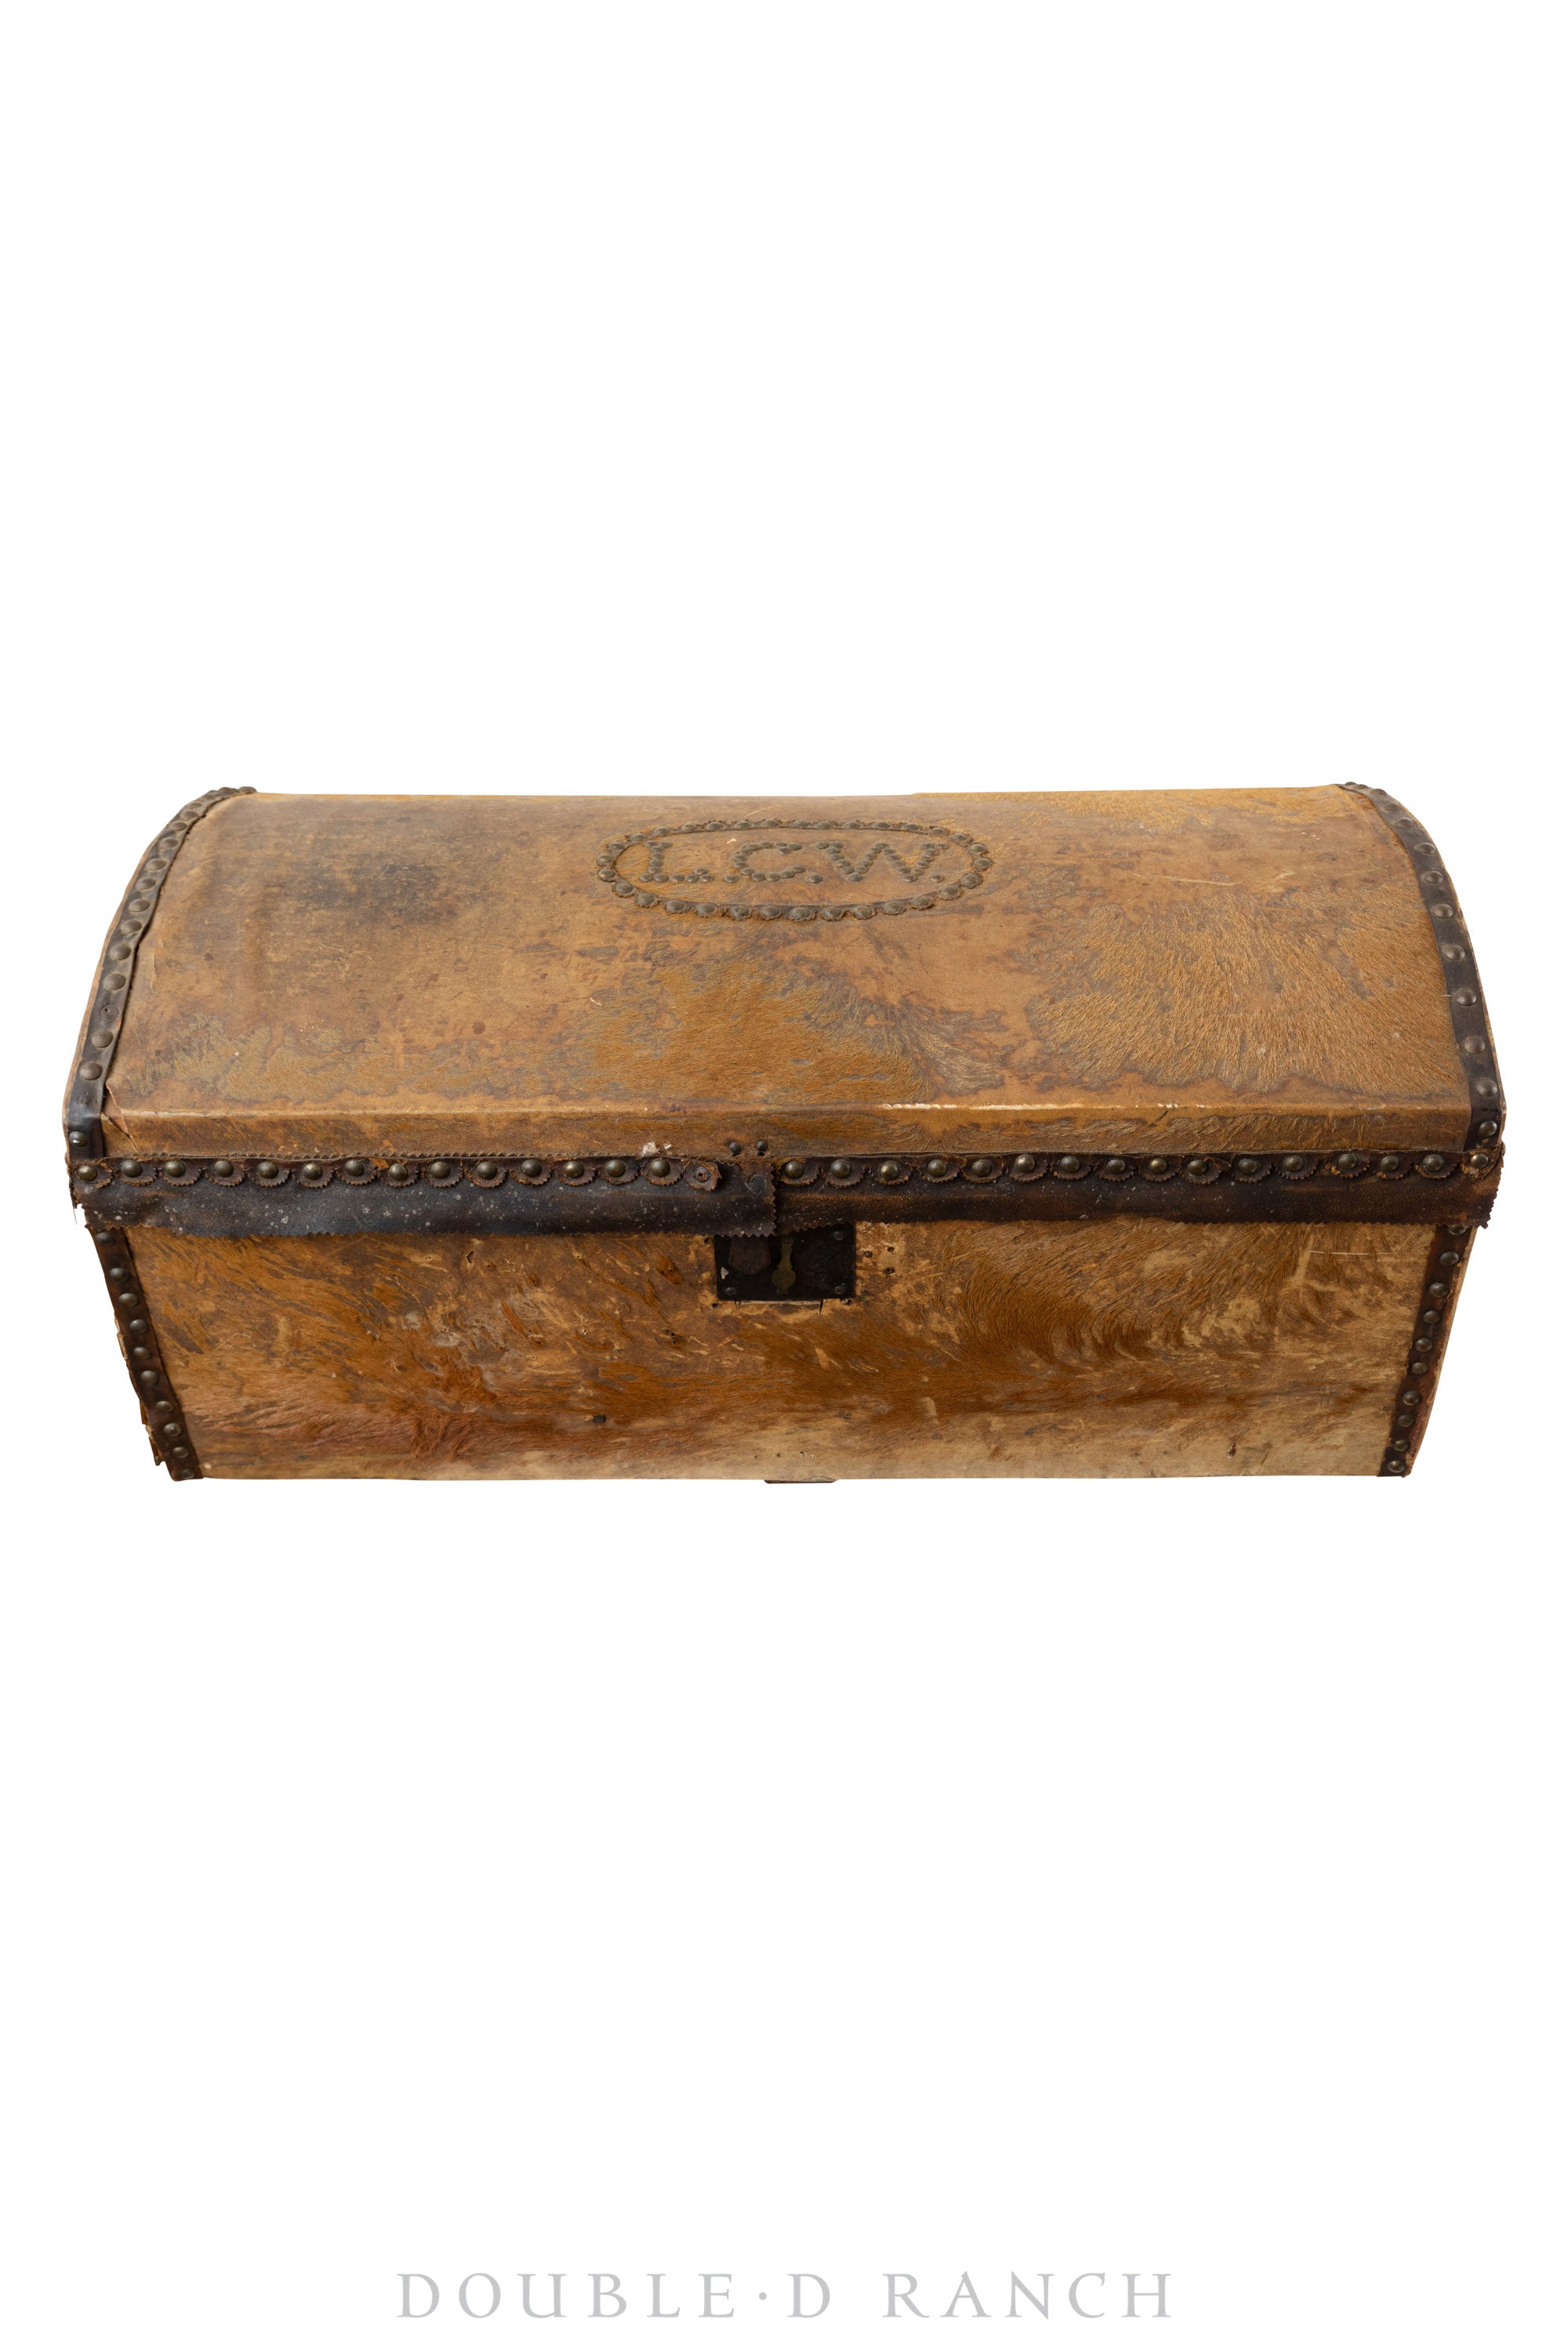 Miscellaneous, Box, Hide, Studs, Robert Burr, Boston, Massachusetts, Vintage, Turn of the Century, 744